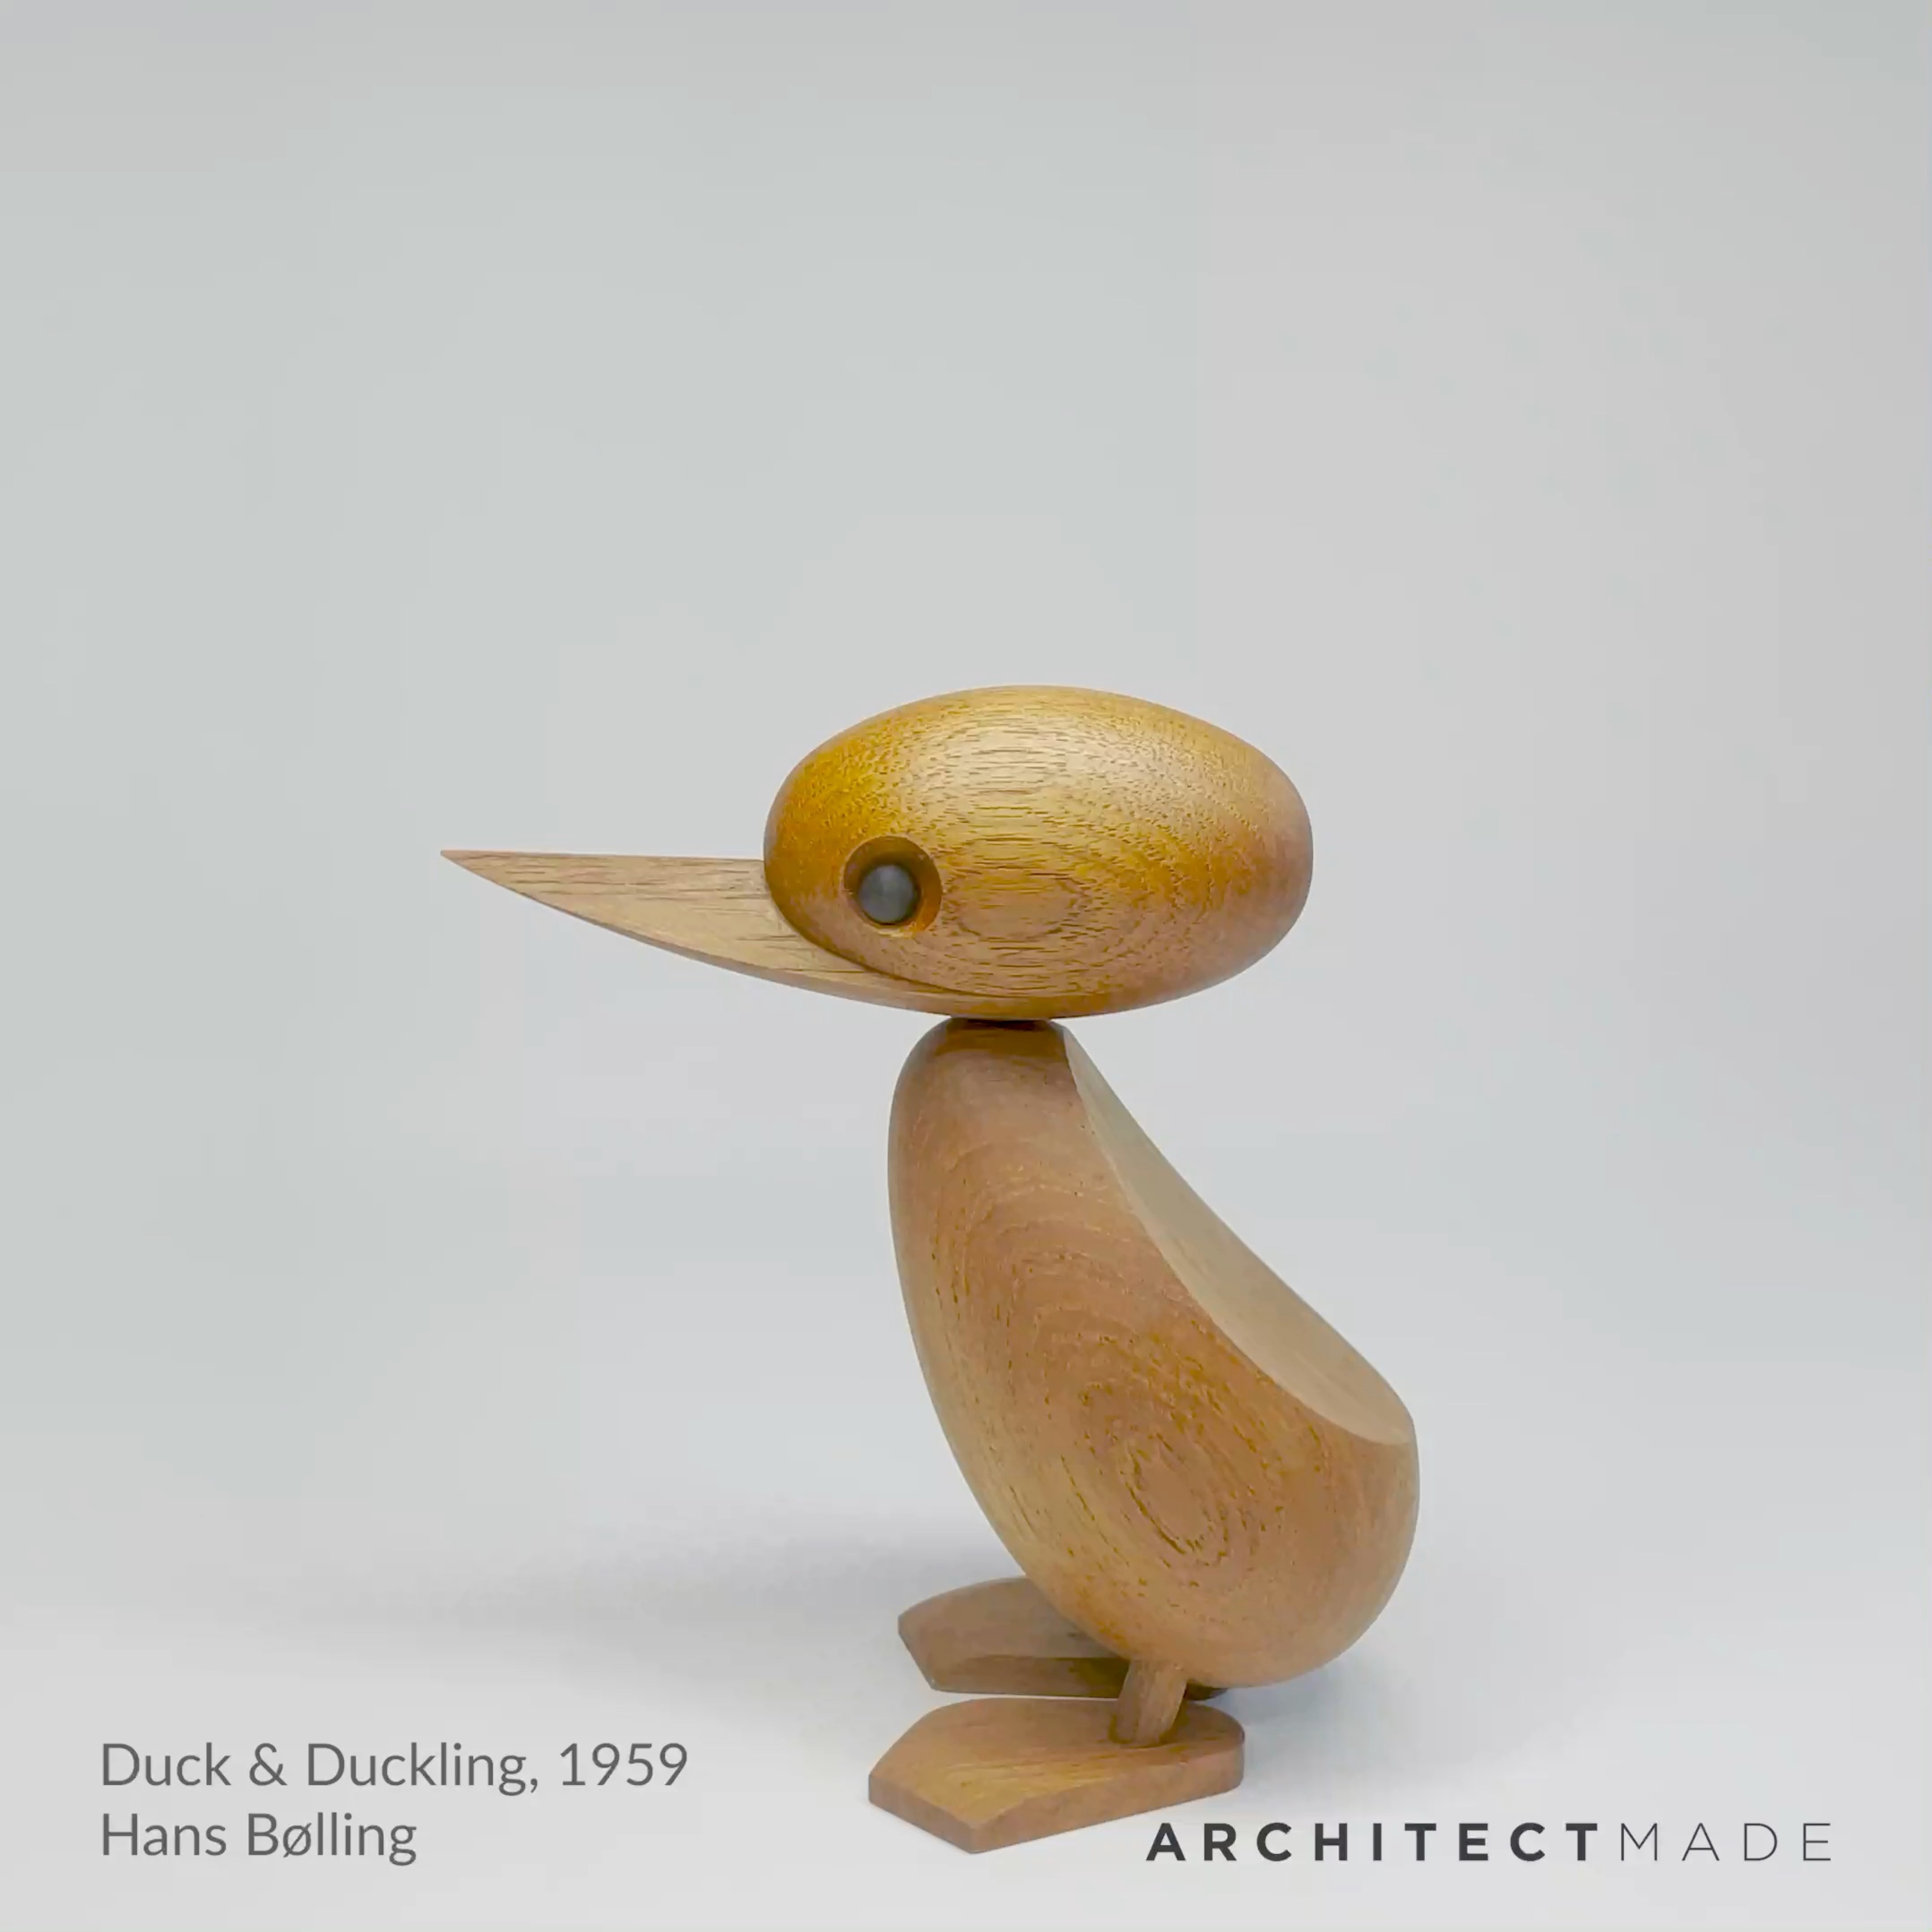 Architectmade – DUCK and DUCKLING – Hans Bølling, 1959